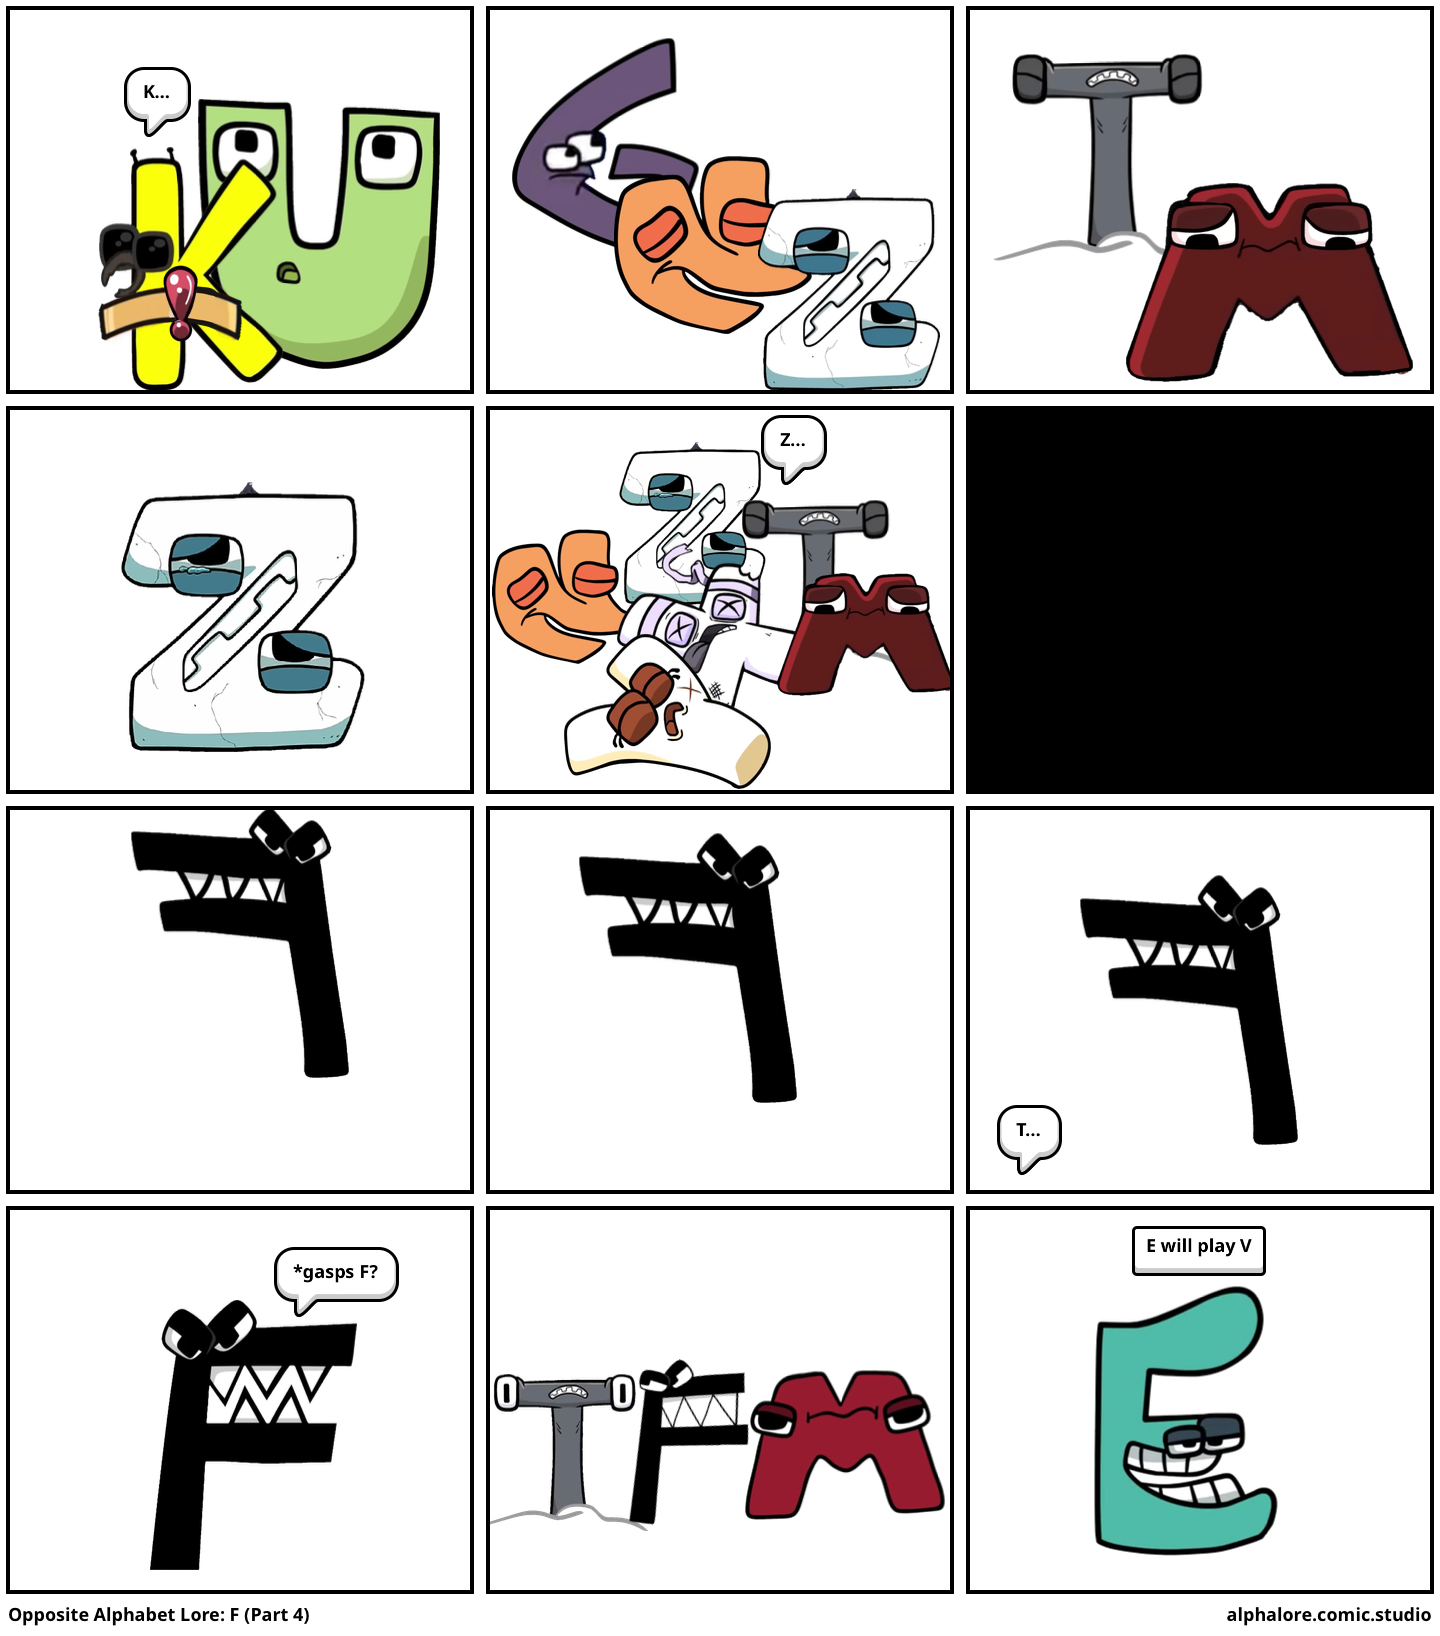 Opposite Alphabet Lore: mA (Part 2) - Comic Studio